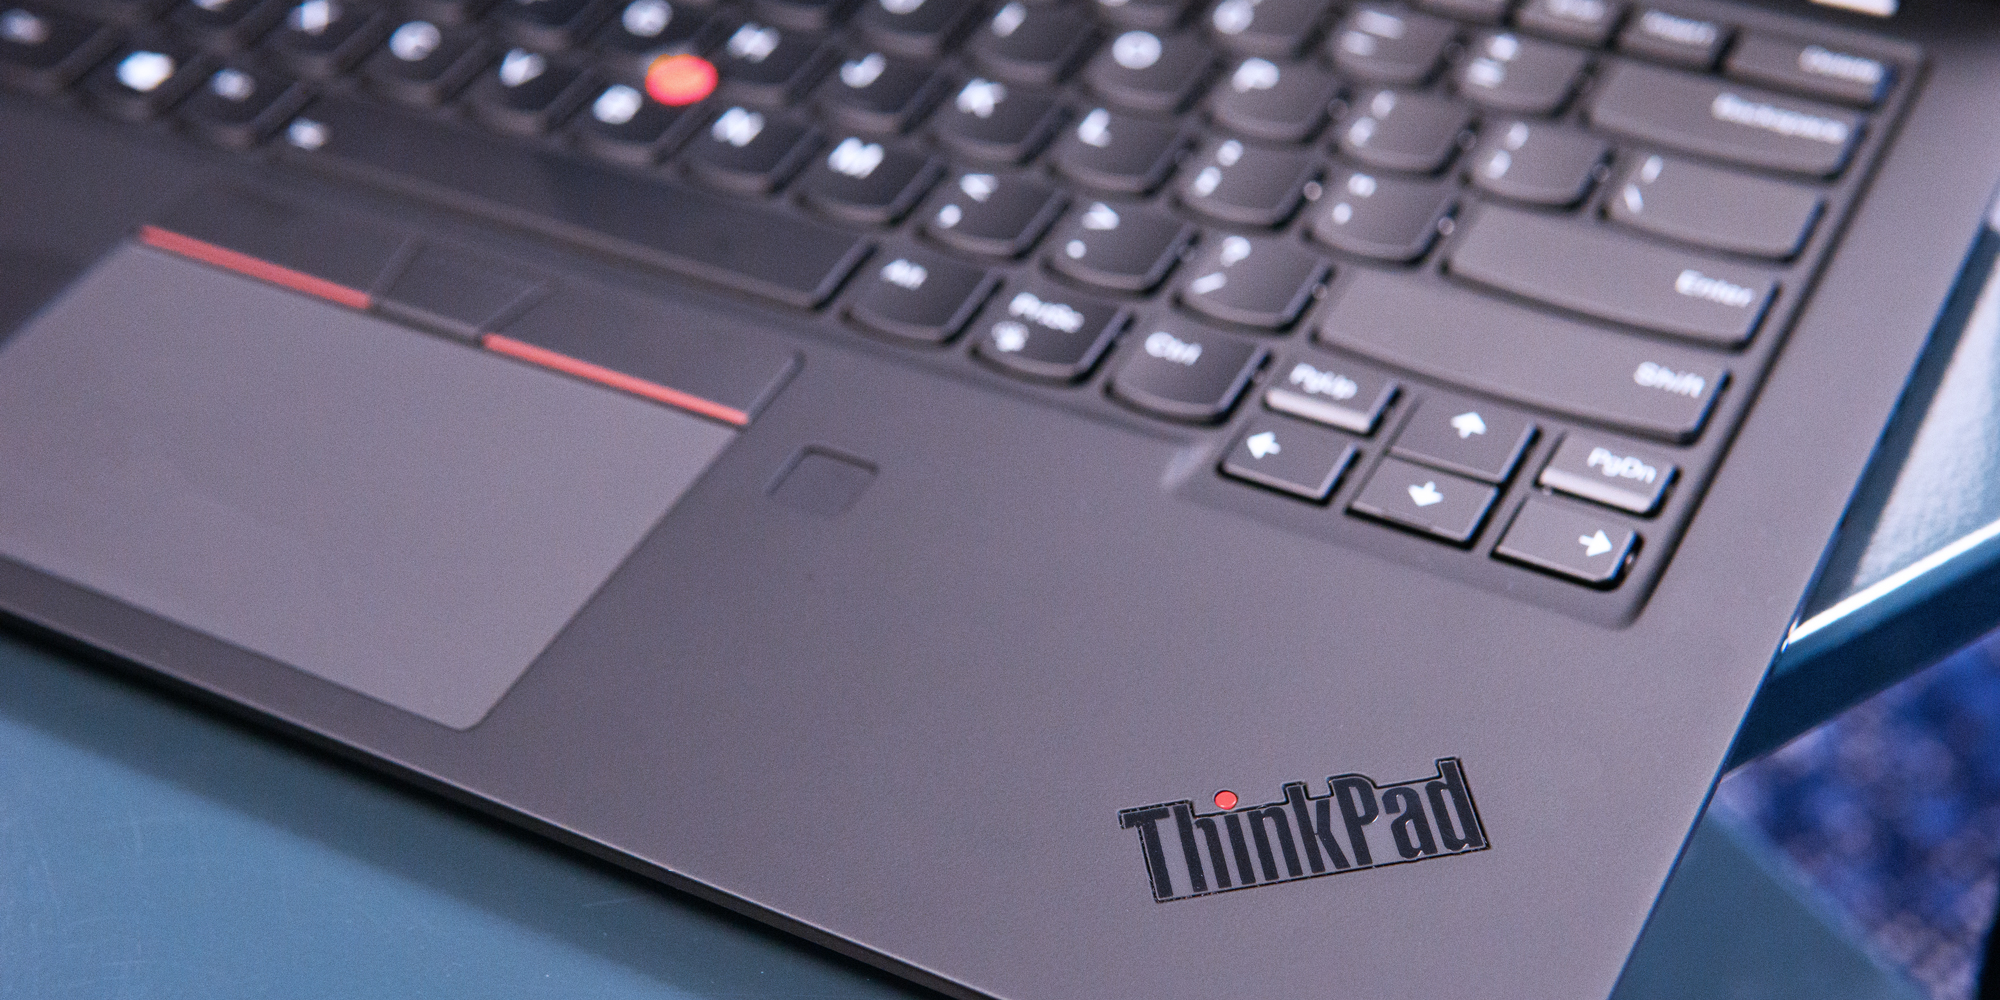 Lenovo's ThinkPad X1 Carbon laptop.